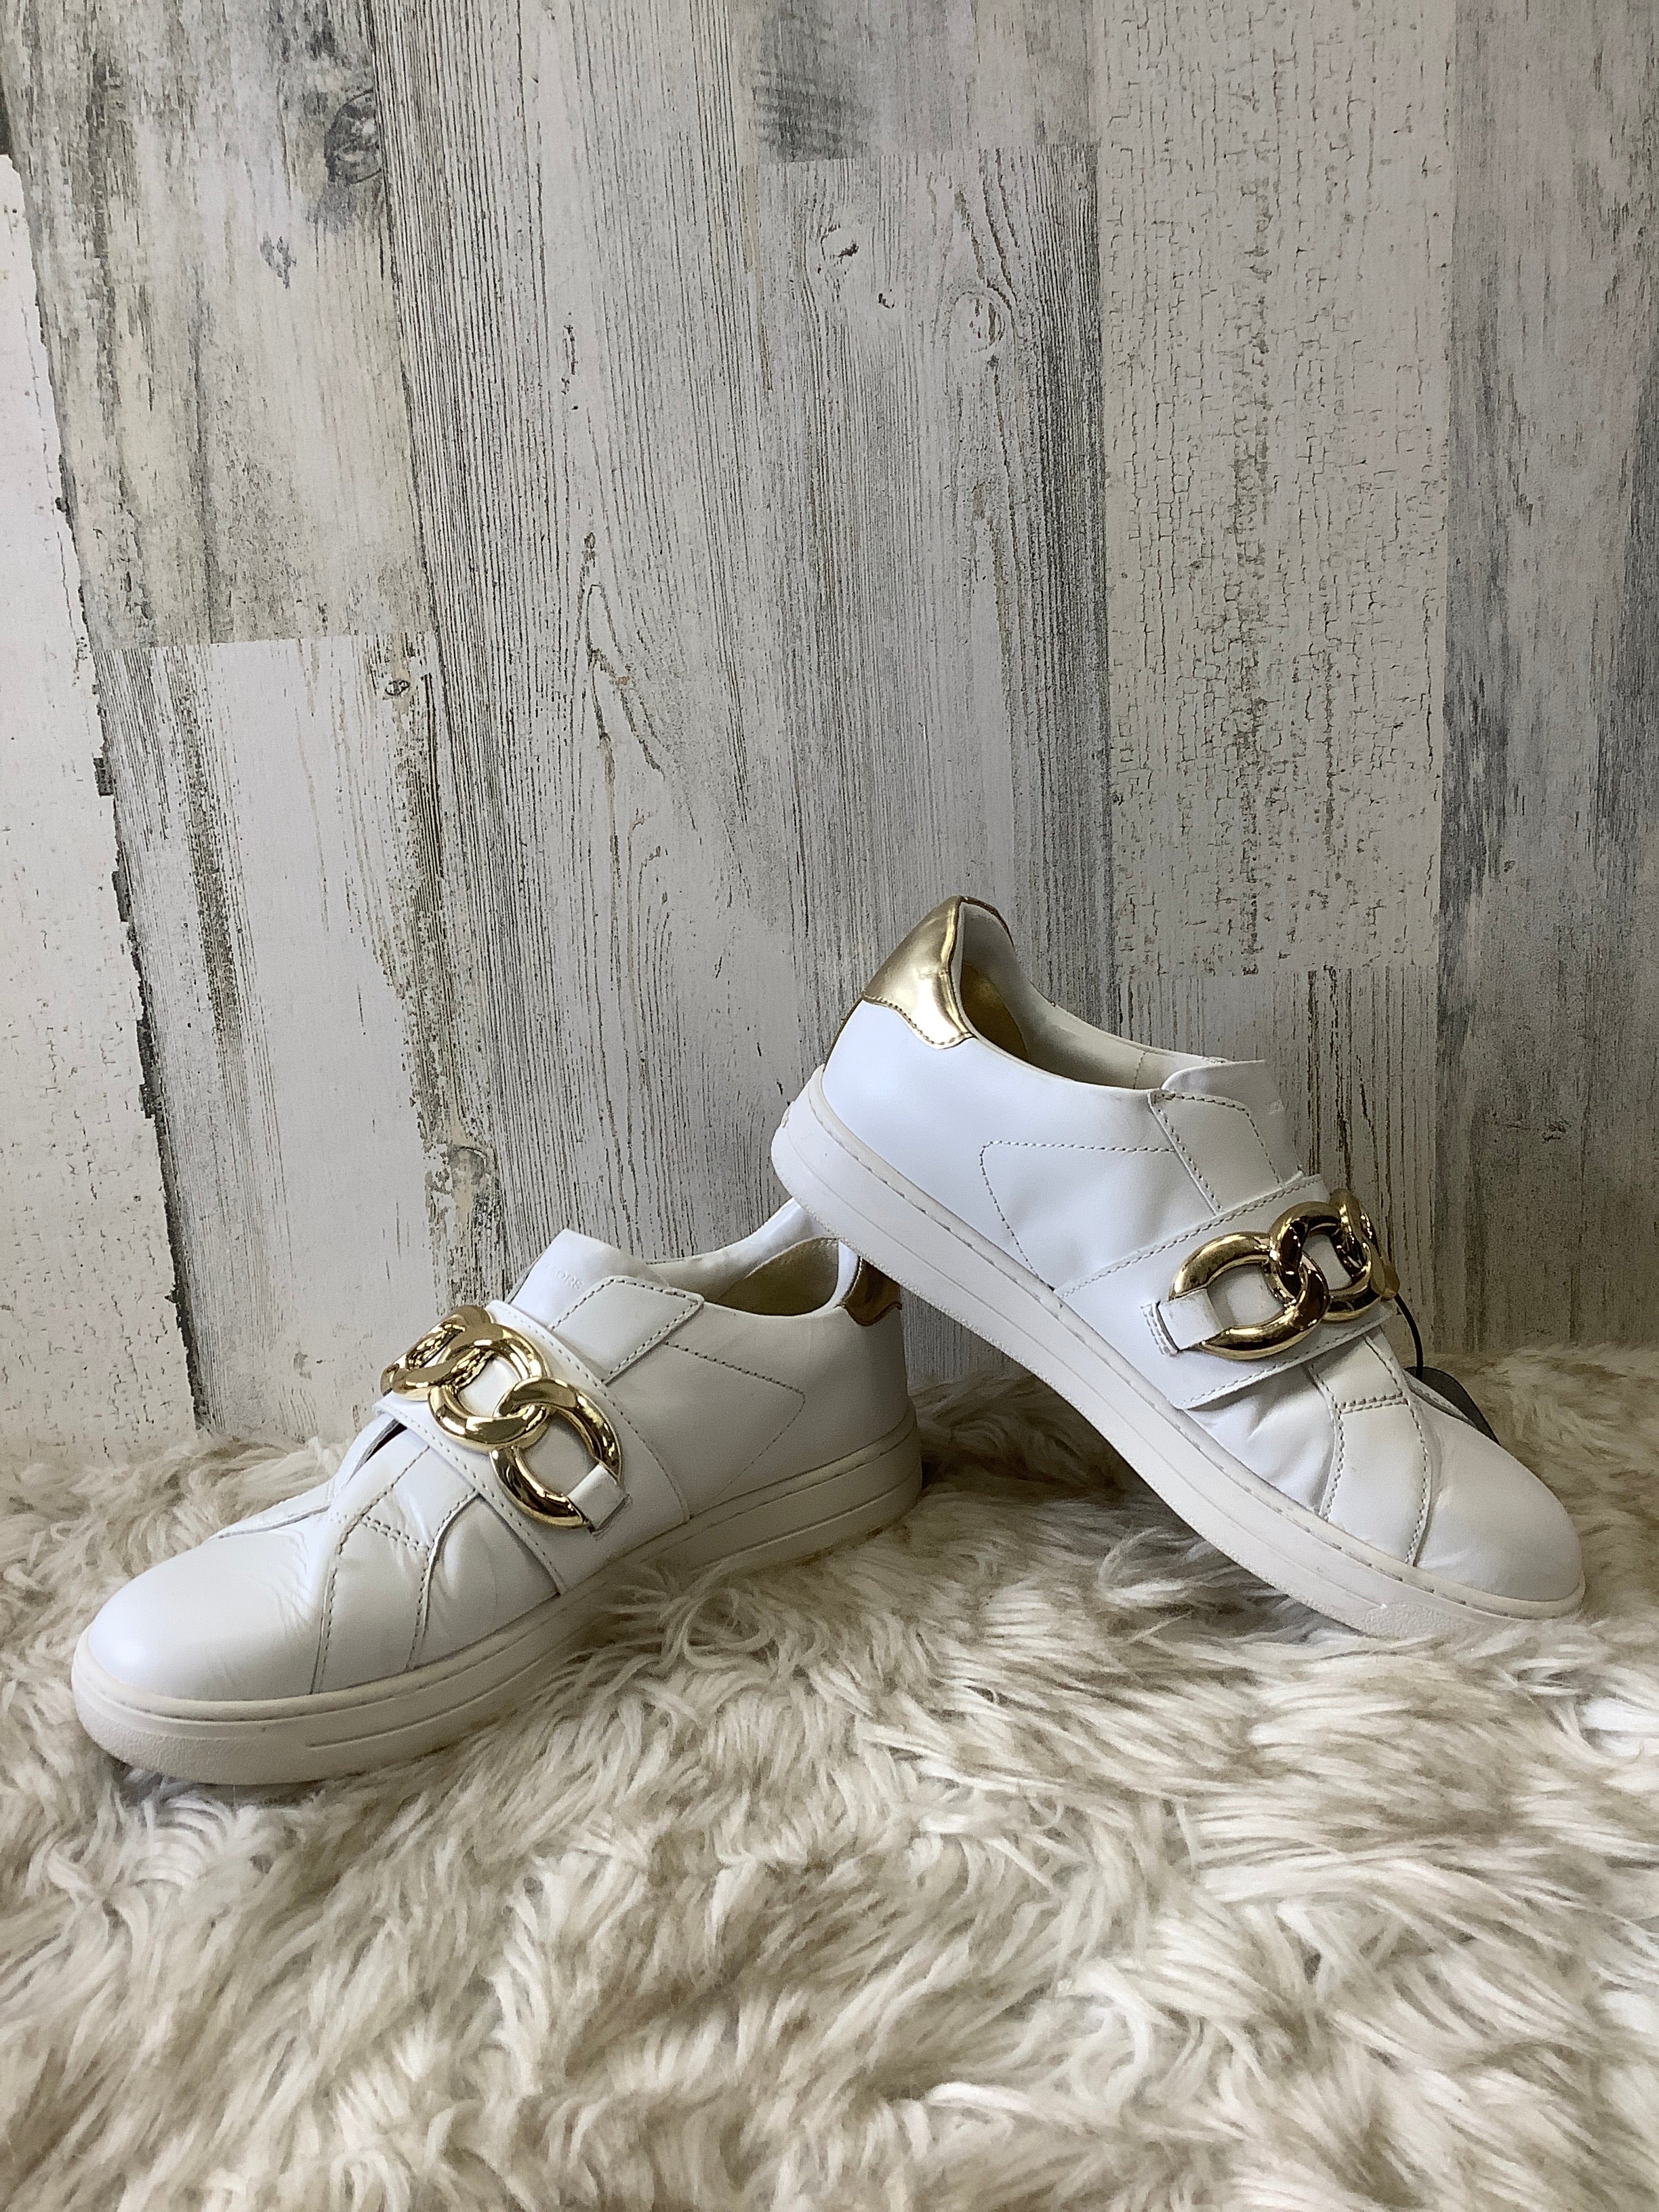 G4956 ballerina donna MICHAEL KORS off whiteblack leather flats shoes woman